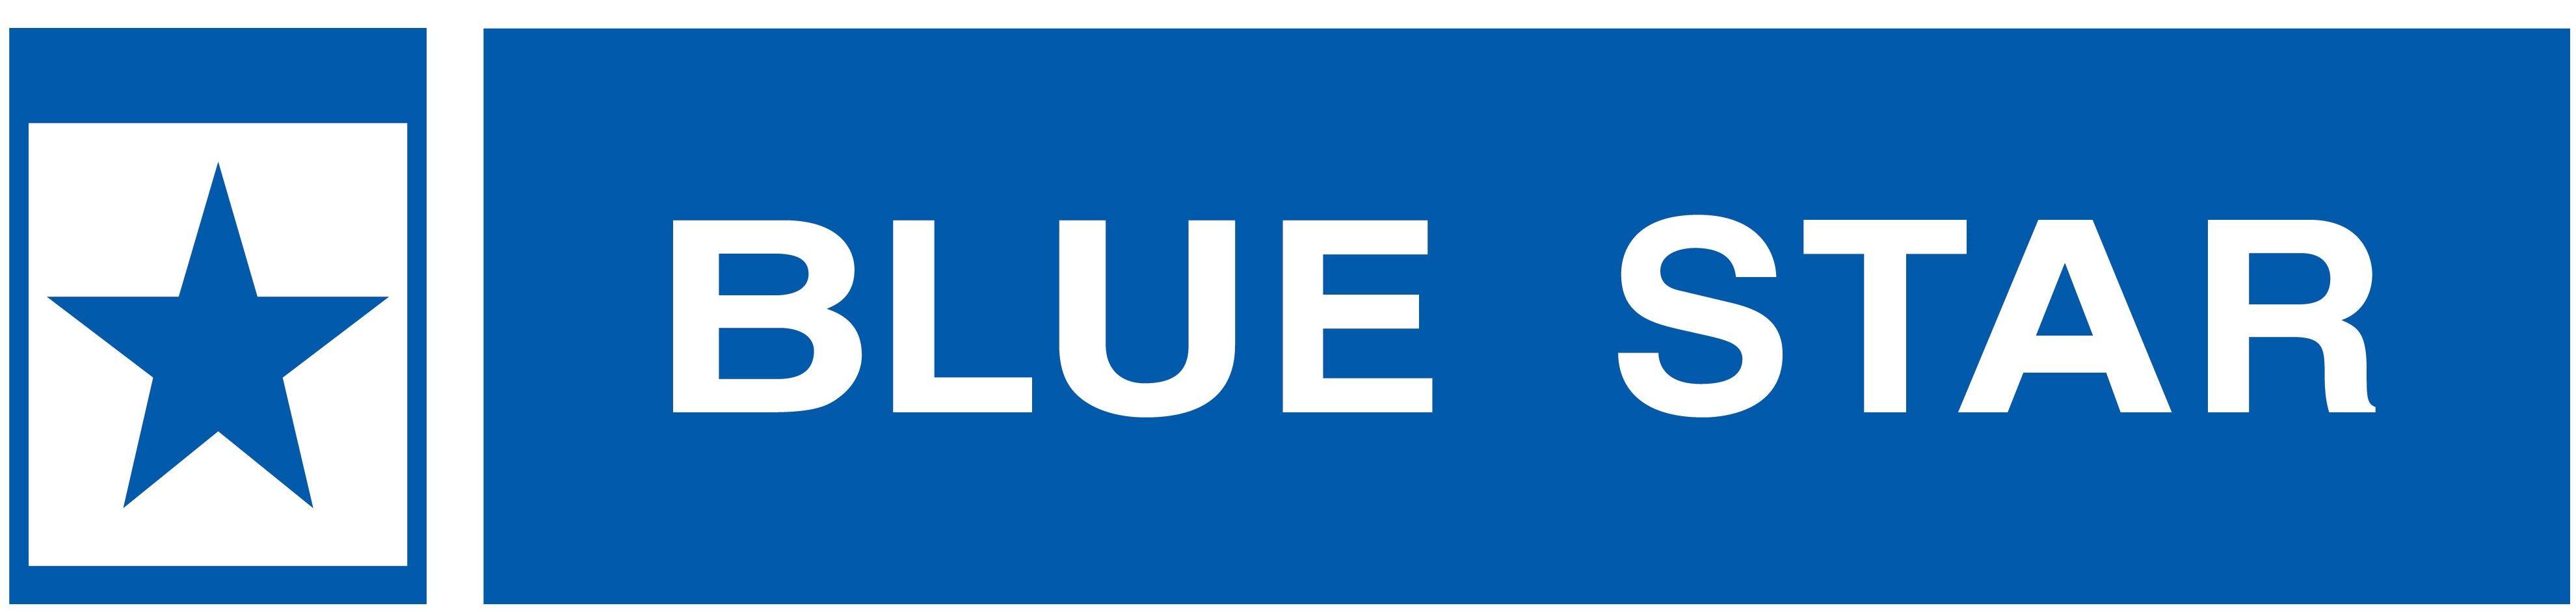 Star Blue Logo - Blue star company Logos